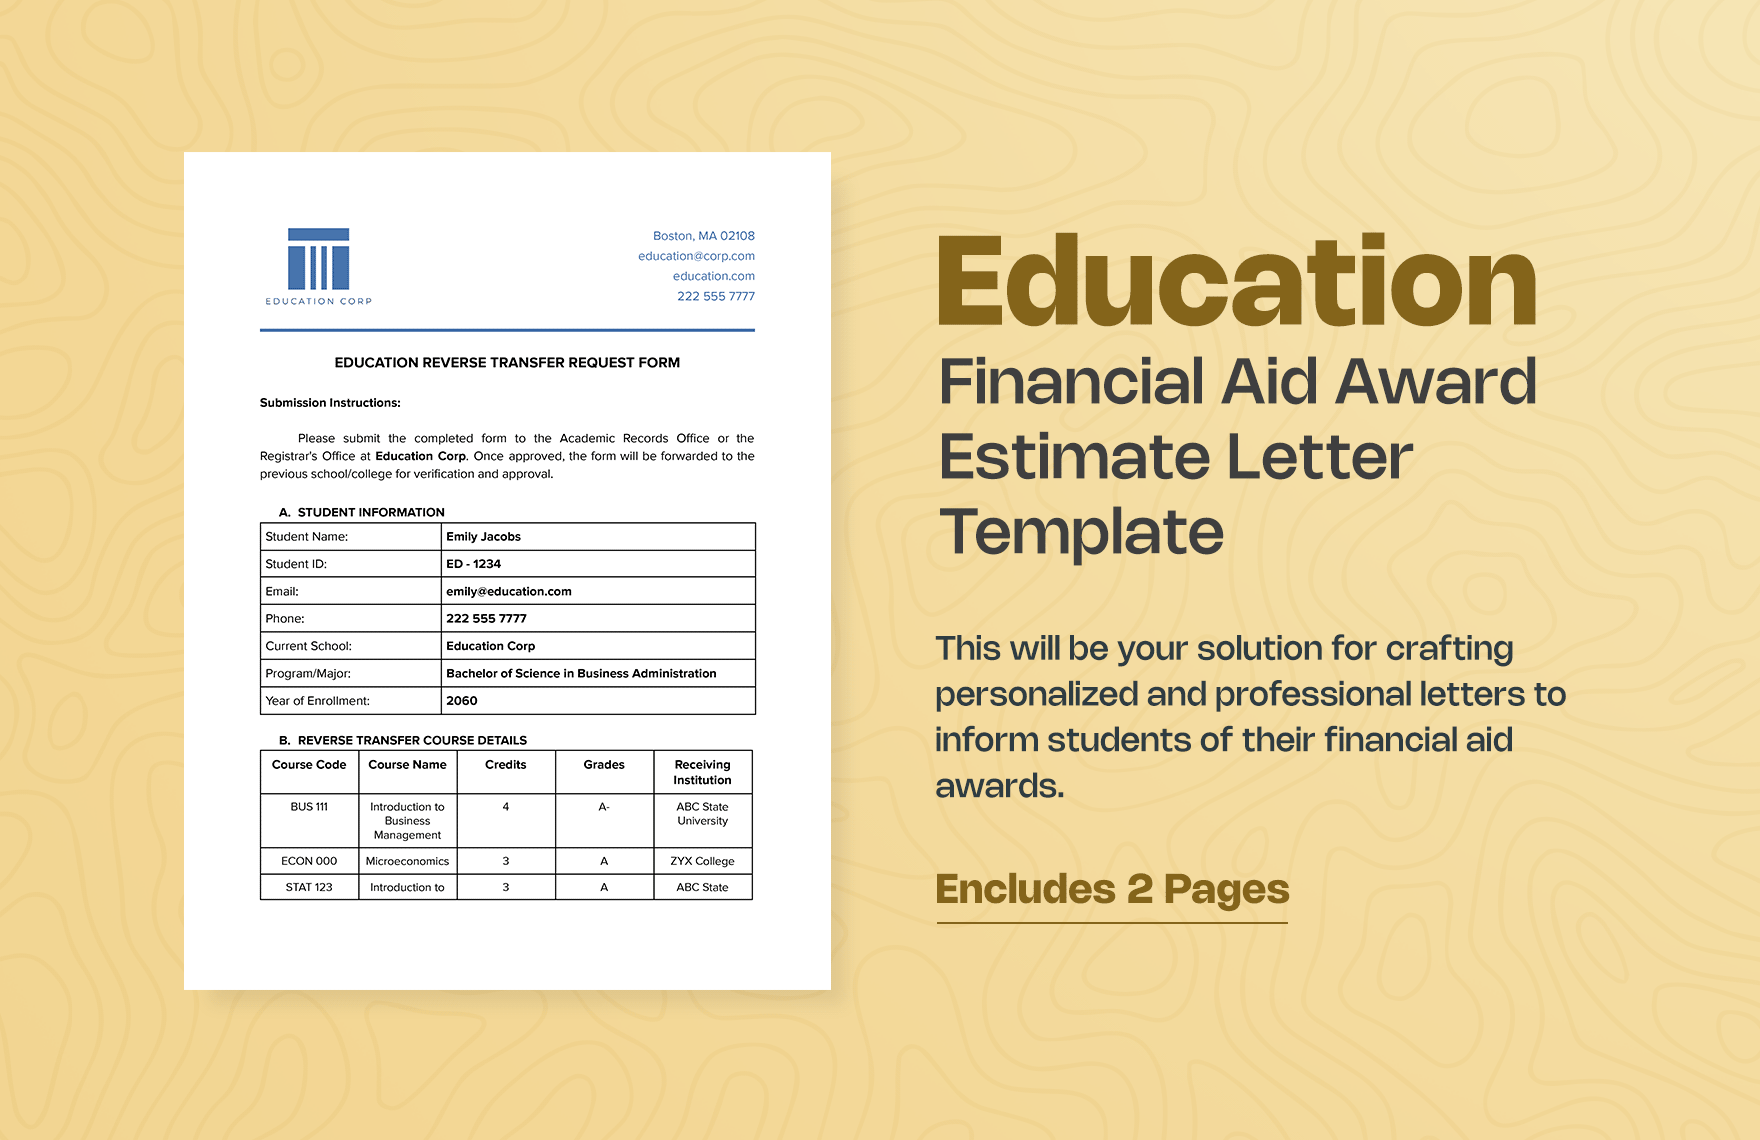 Education Financial Aid Award Estimate Letter Template